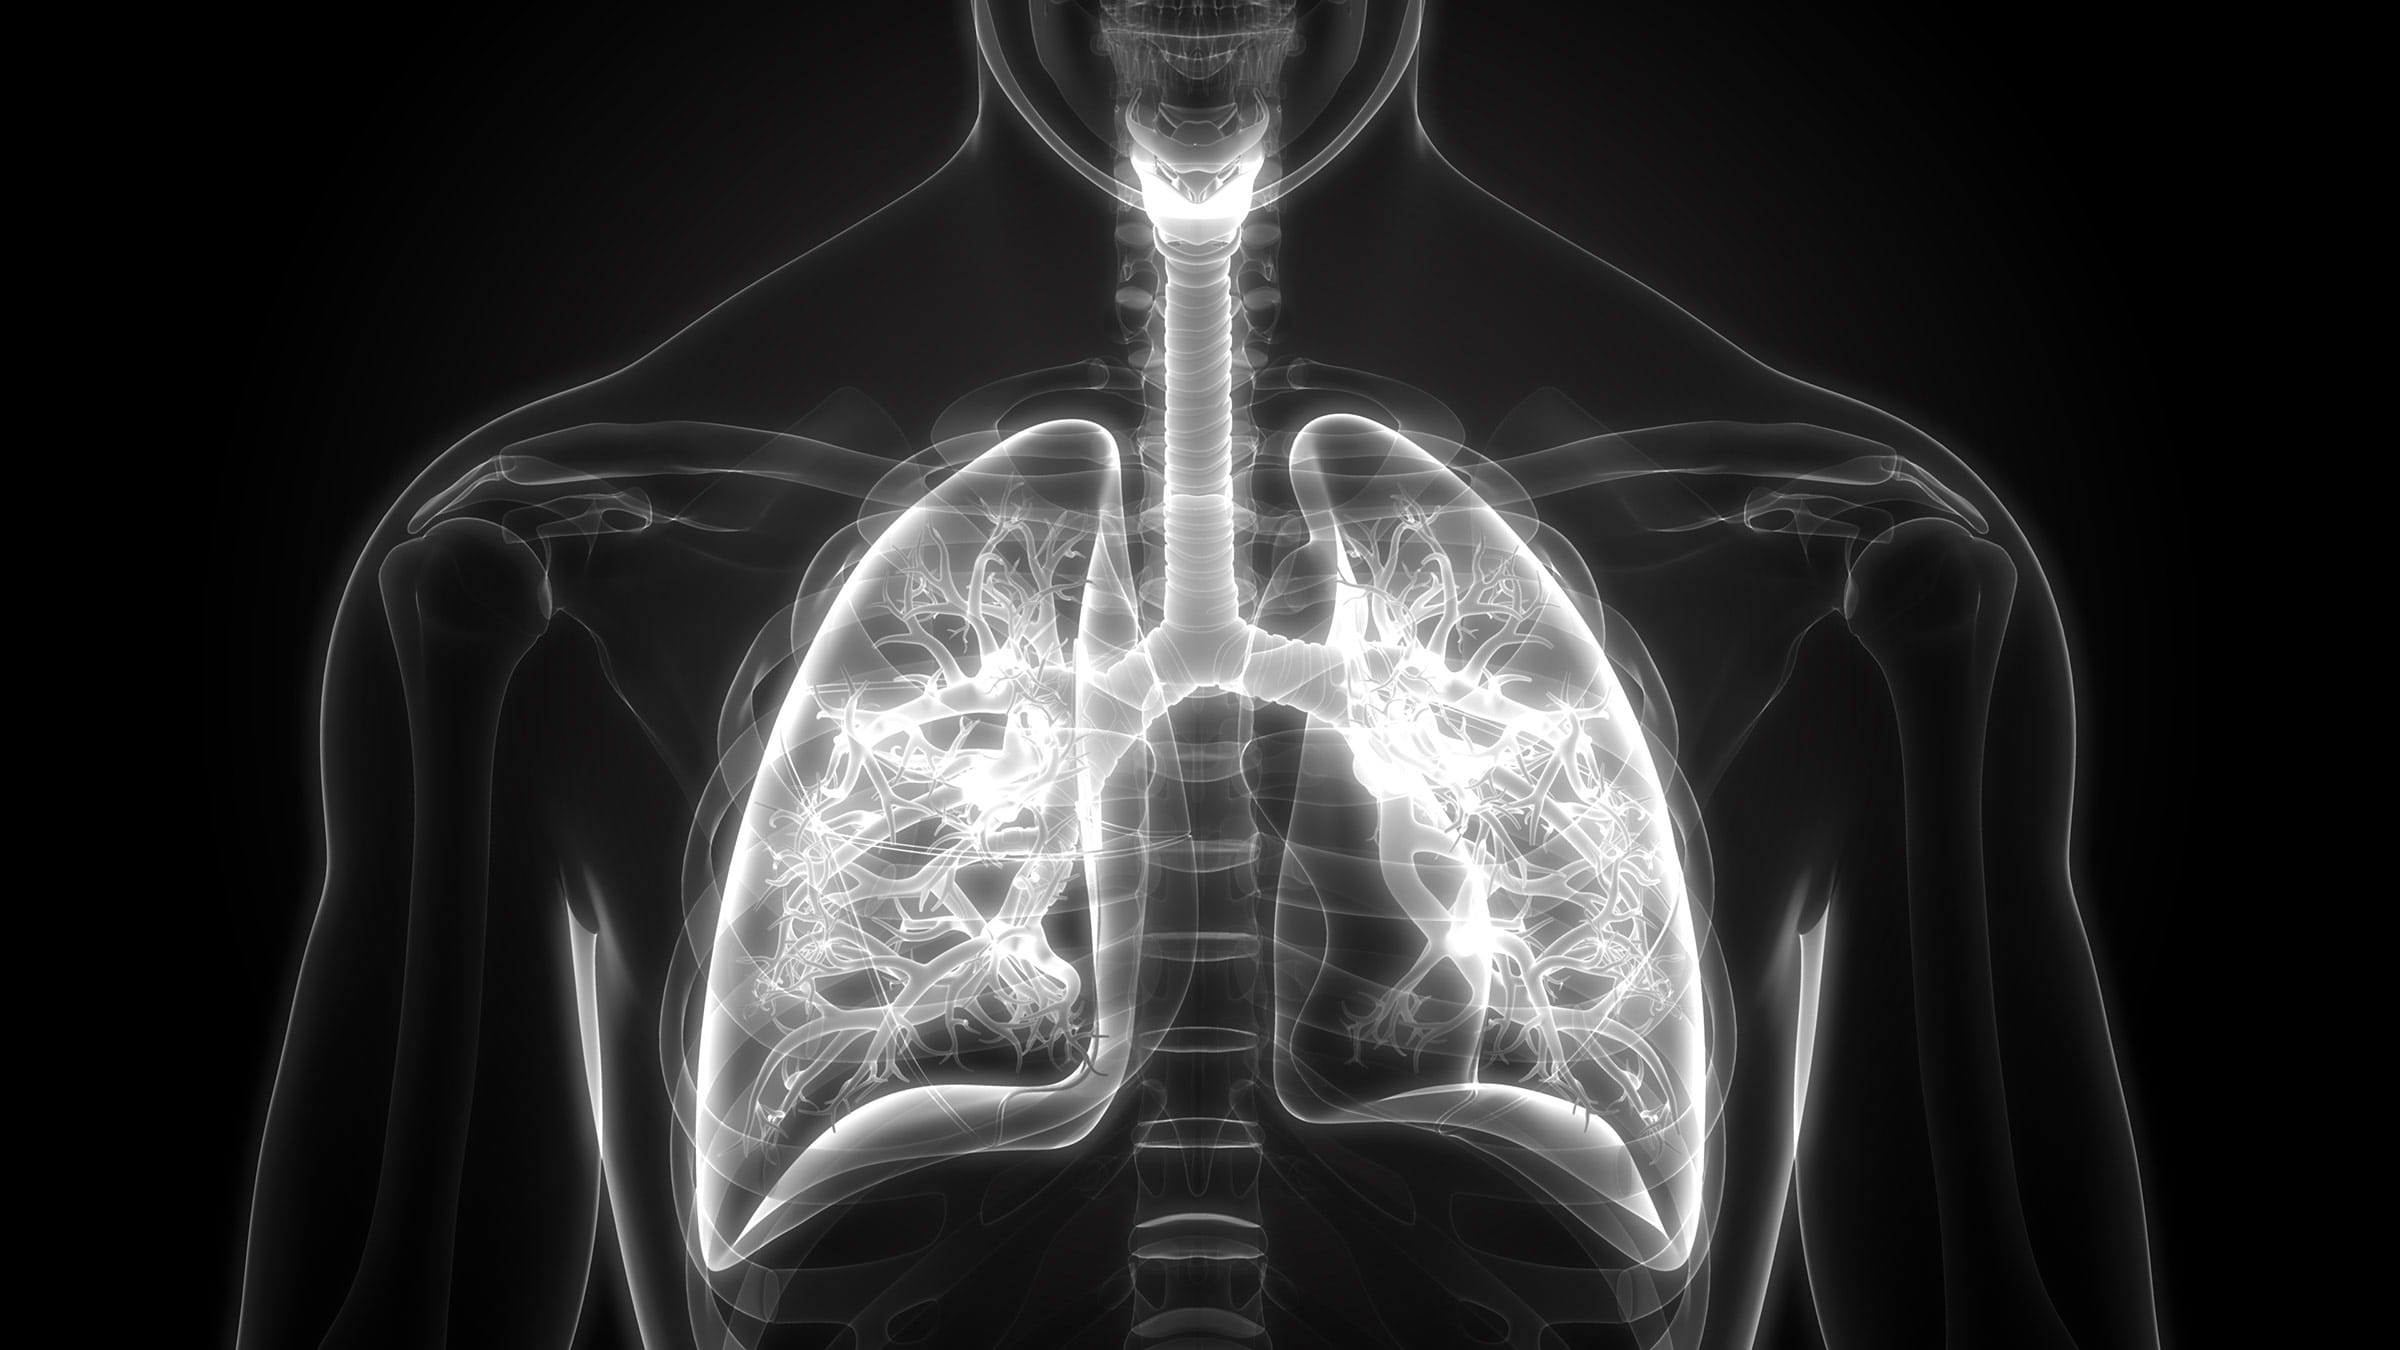 3D rendering of lungs